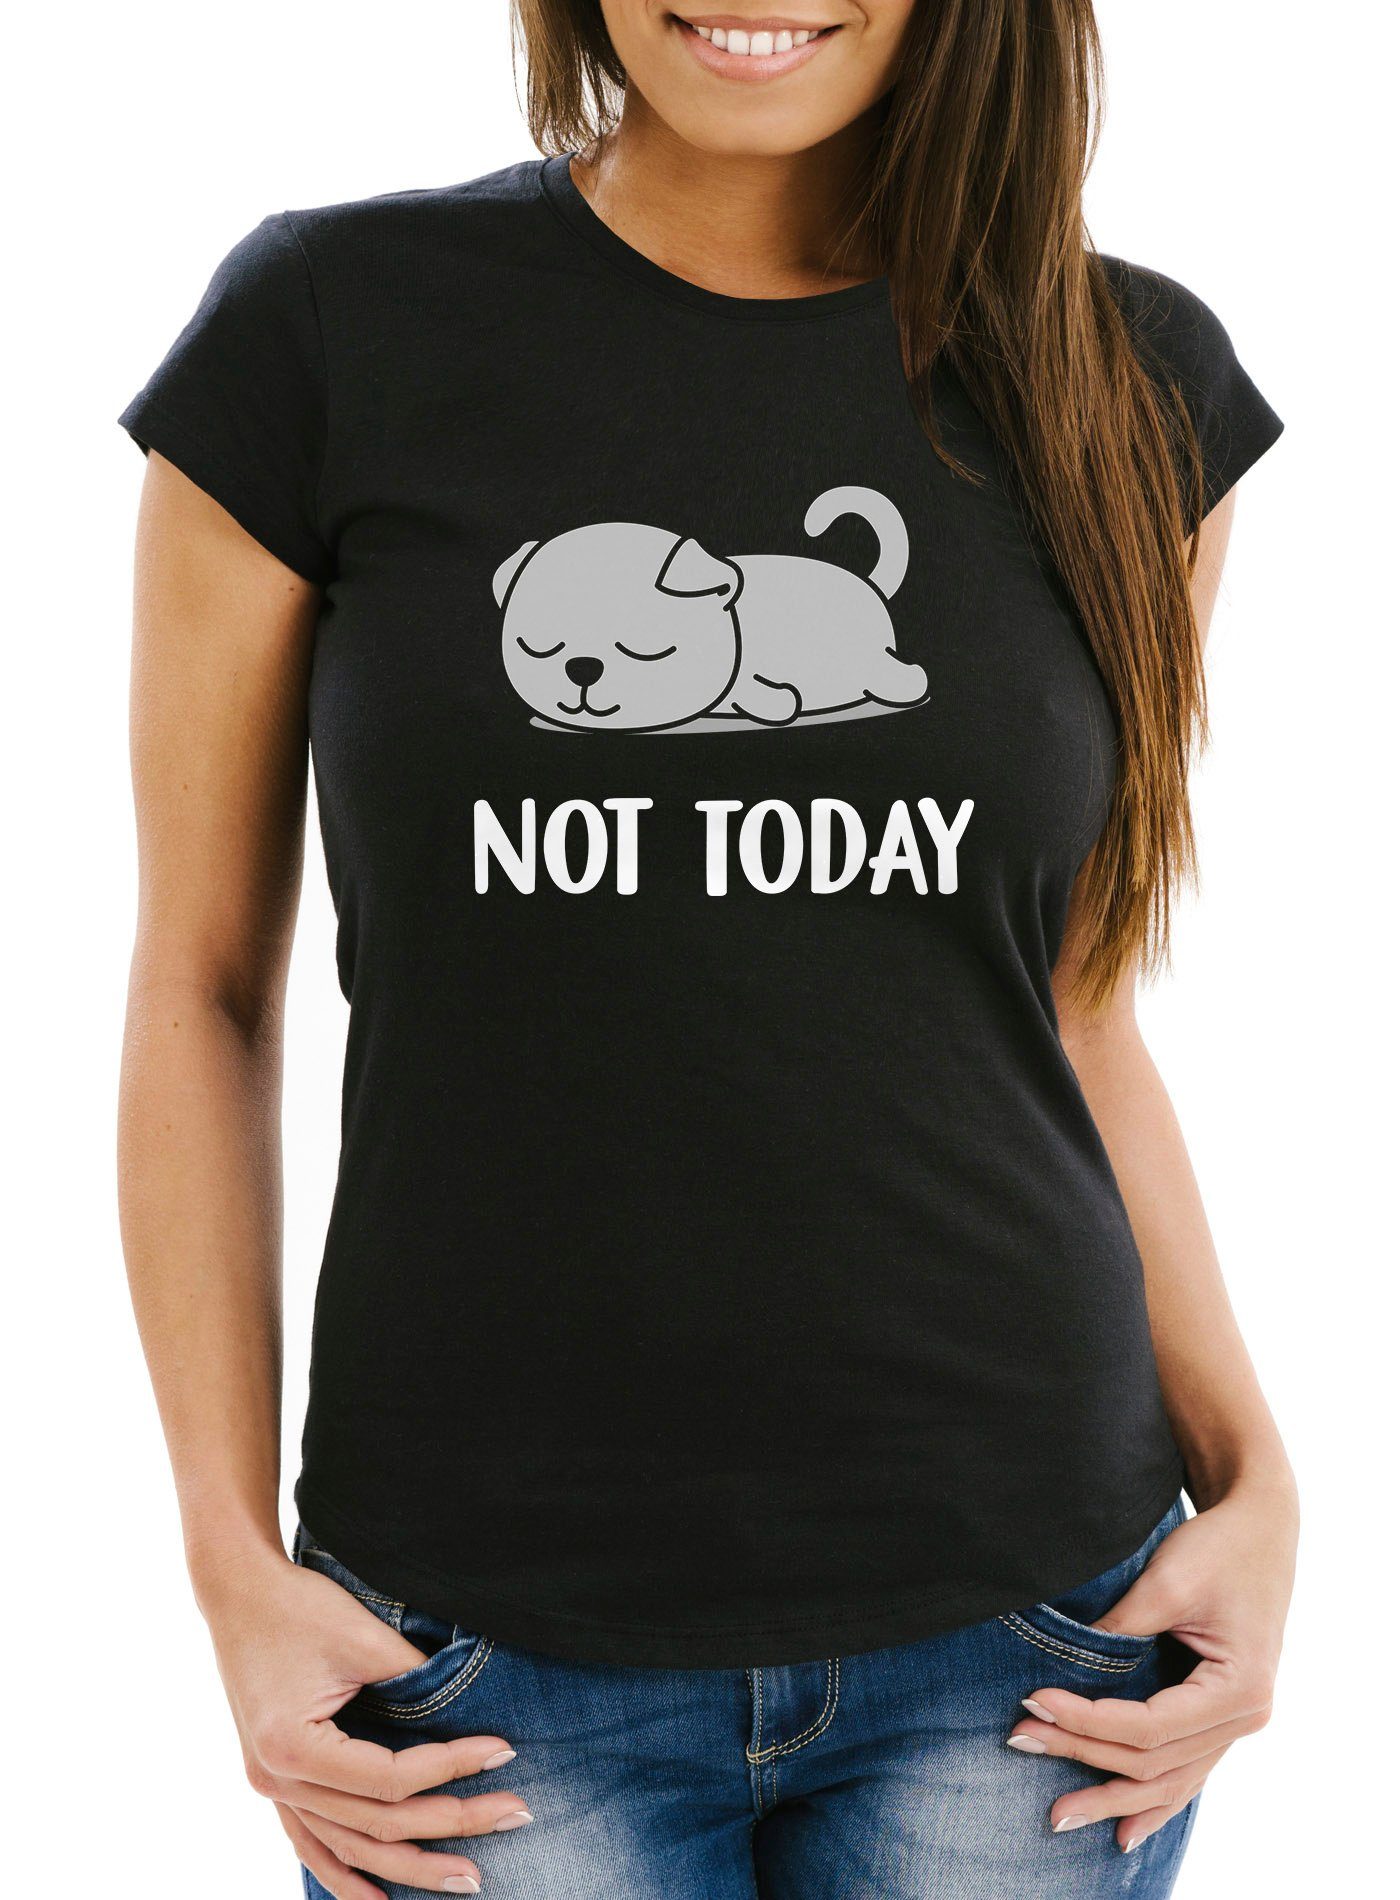 MoonWorks Print-Shirt Lustiges Fun-Shirt T-Shirt schwarz Today Chillen Damen Moonworks® mit Print Katze Not